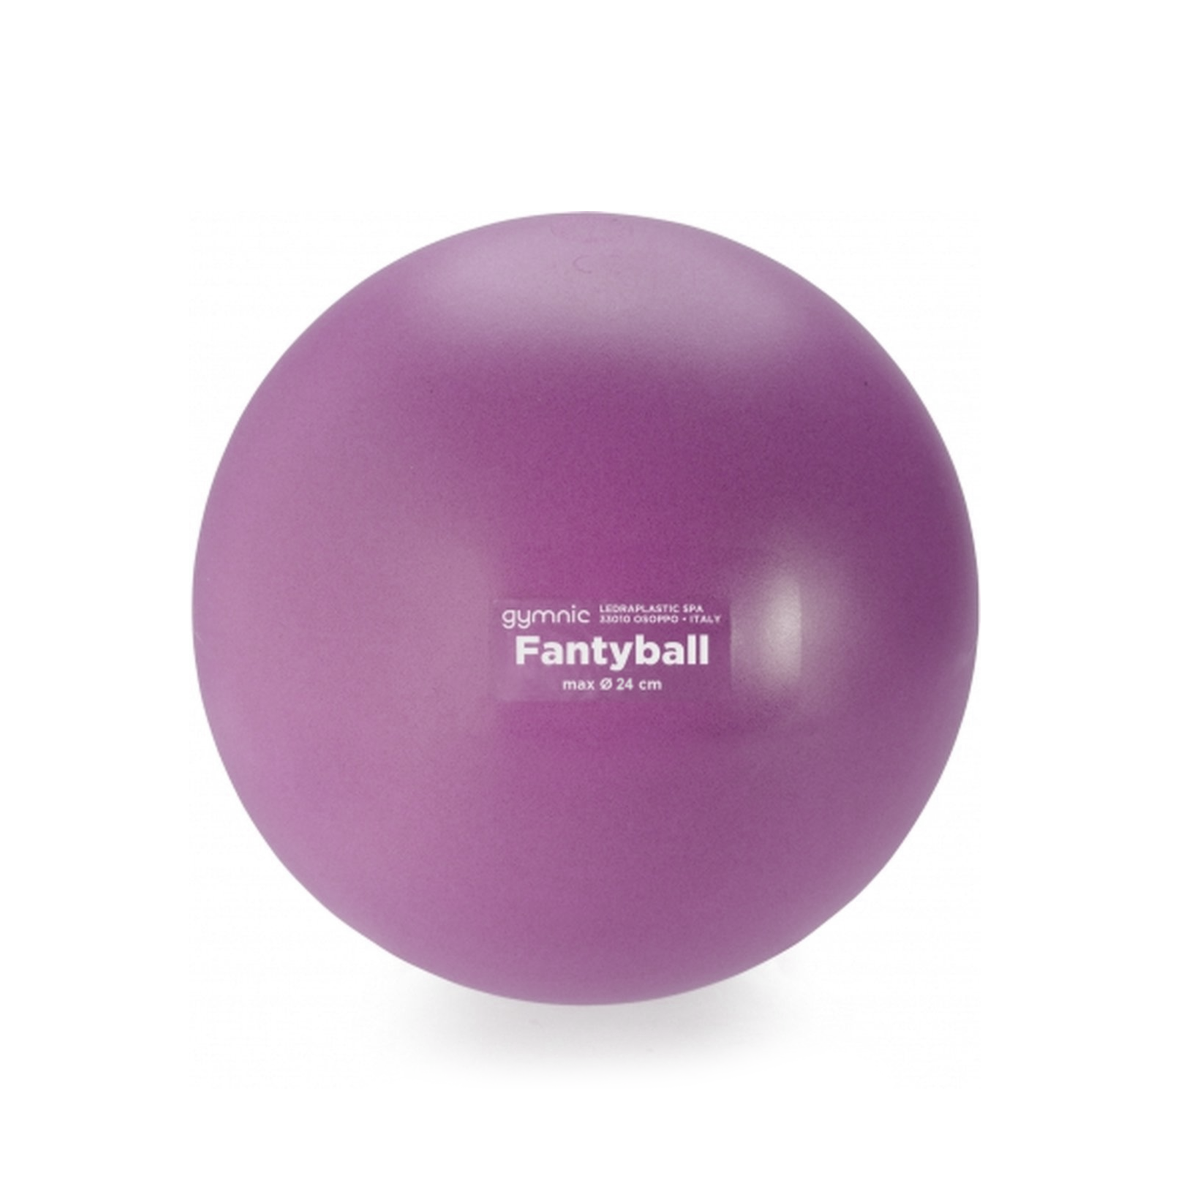 Gymnic® Fantyball super soft pattanó labda 24 cm lila